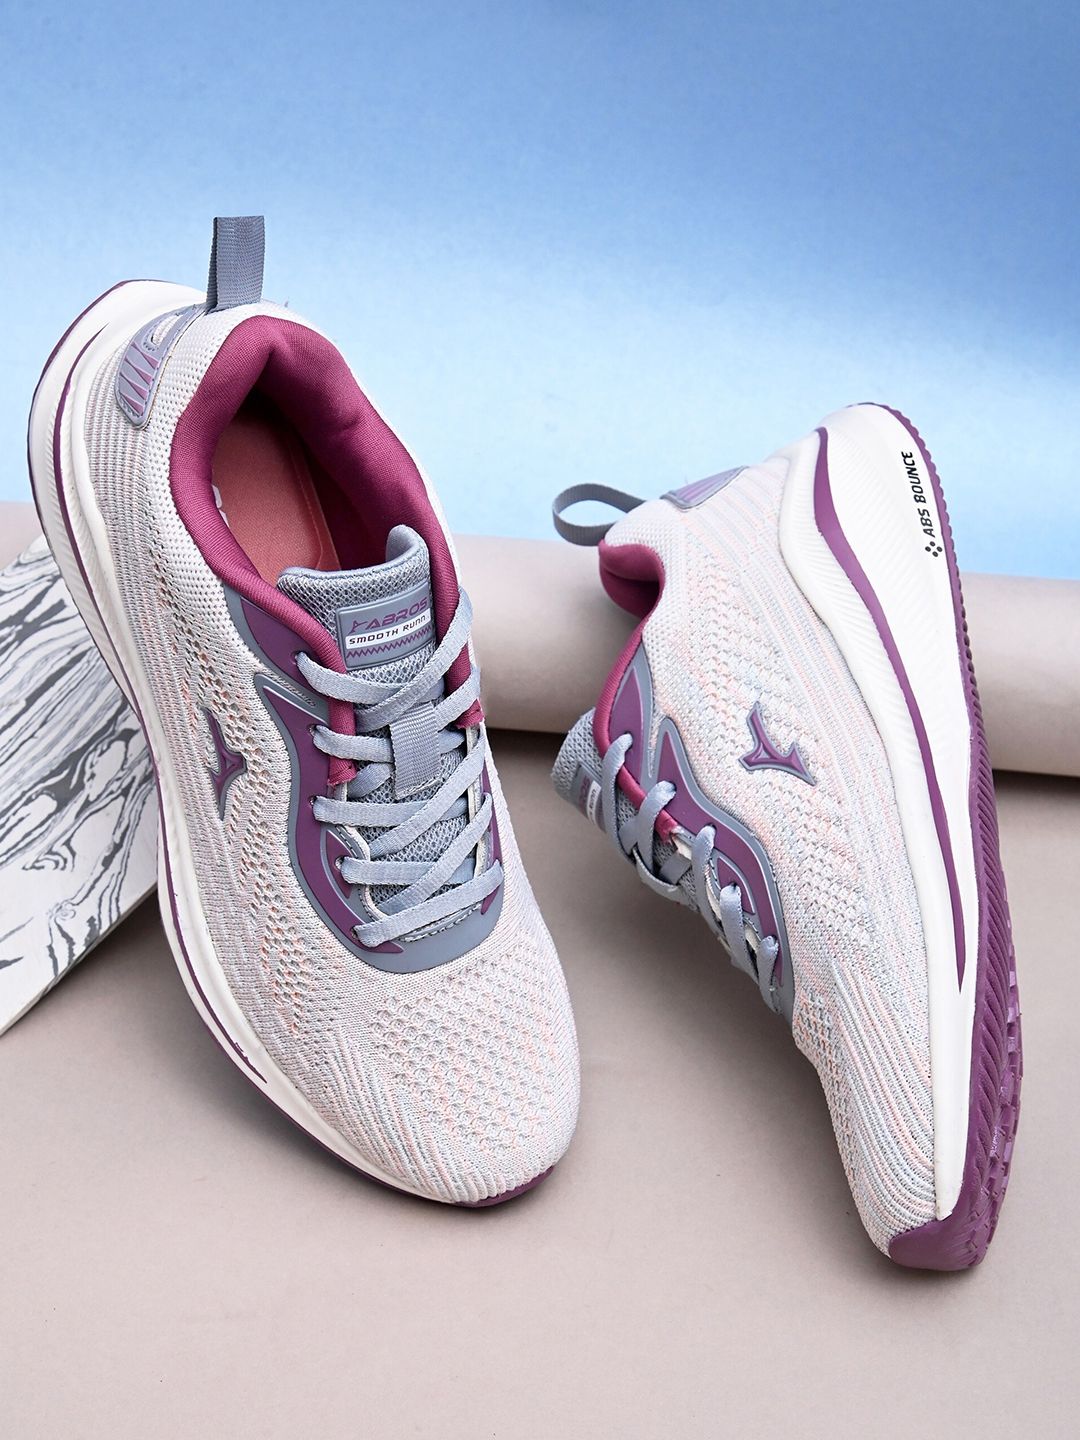 ABROS Women Grey Mesh Running Shoes Price in India